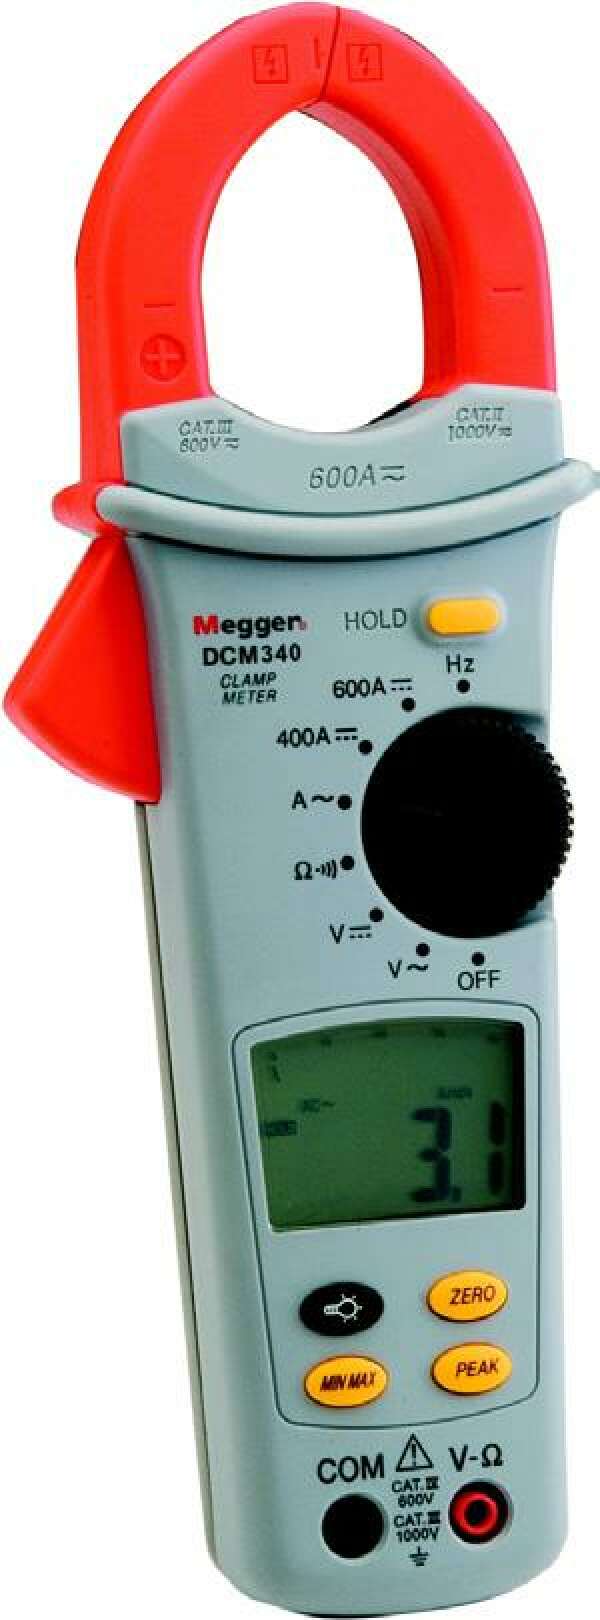 Megger DCM340 - токовые клещи